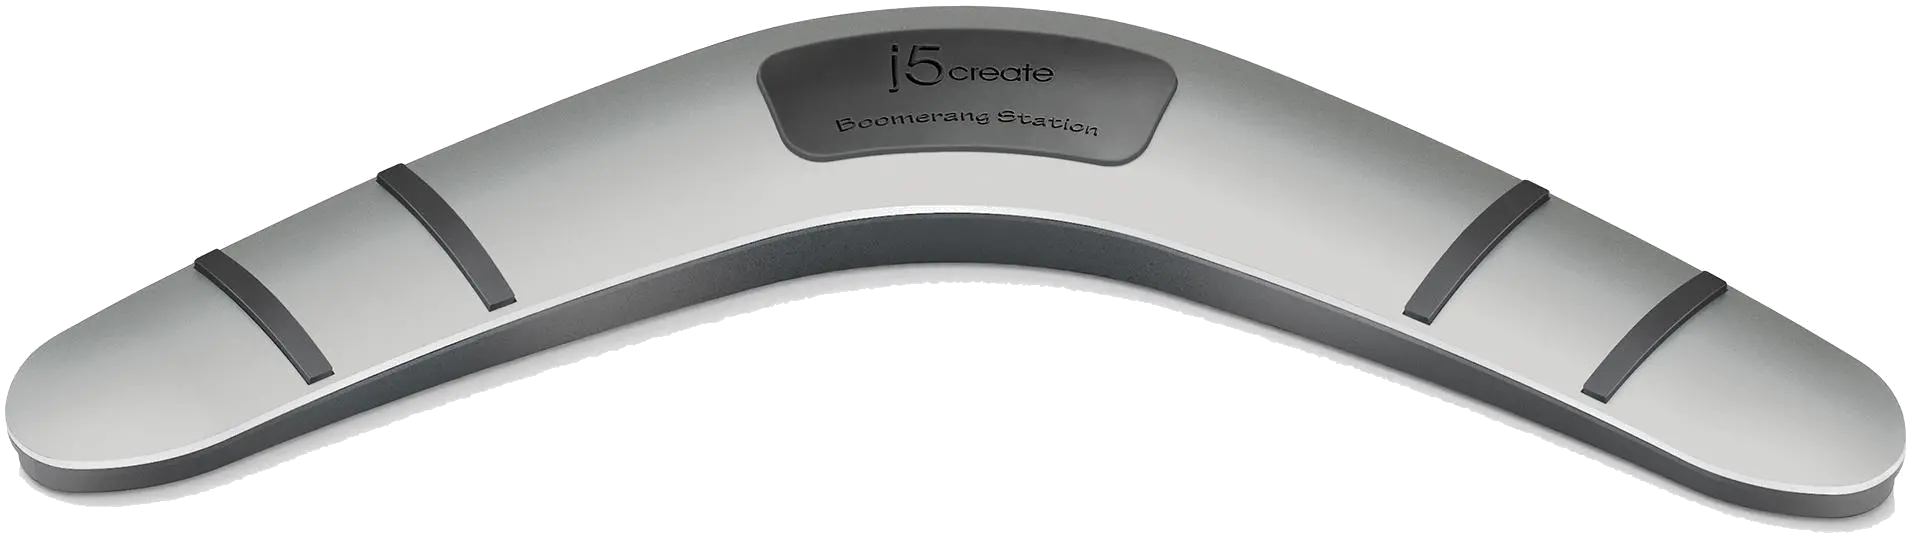 j5create JUD481-N BOOMERANG STATION UNIVERSAL/USB3.0 DOCKING STATION EU/UK, 4712795081305